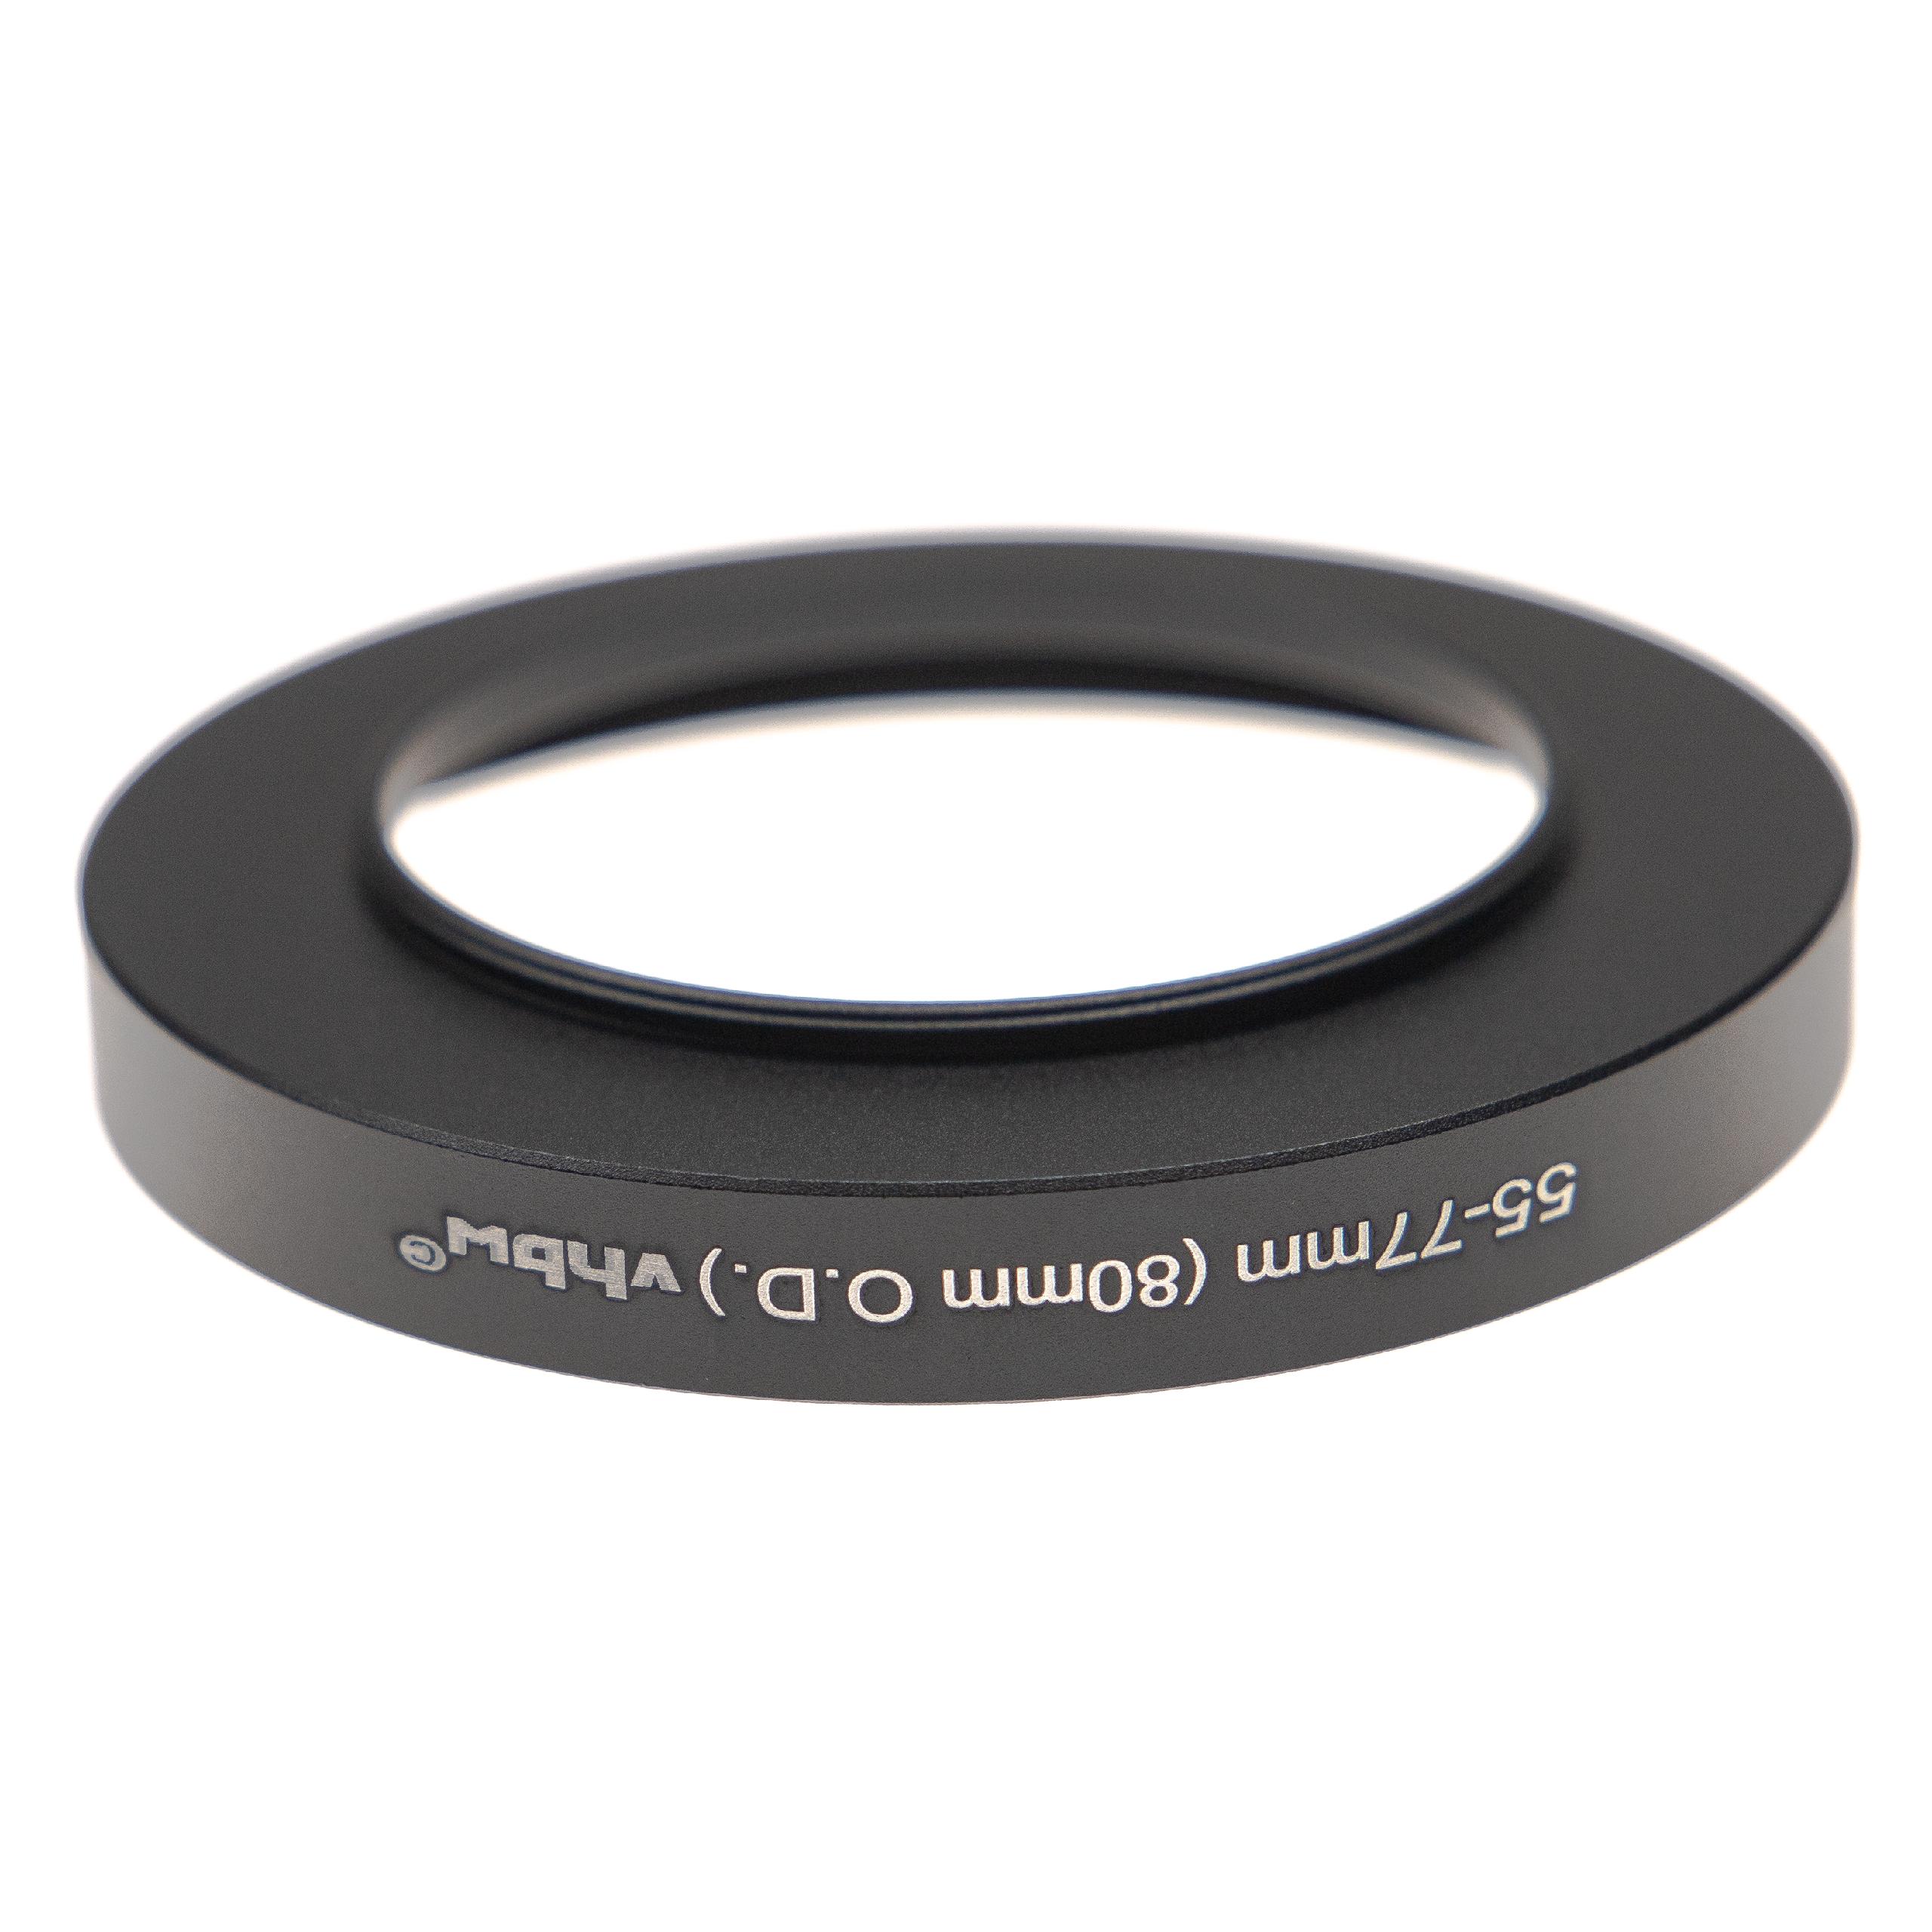 Step-Up-Ring Adapter 55 mm auf 77 mm passend für Matte Boxen 80 mm O.D. - Filteradapter